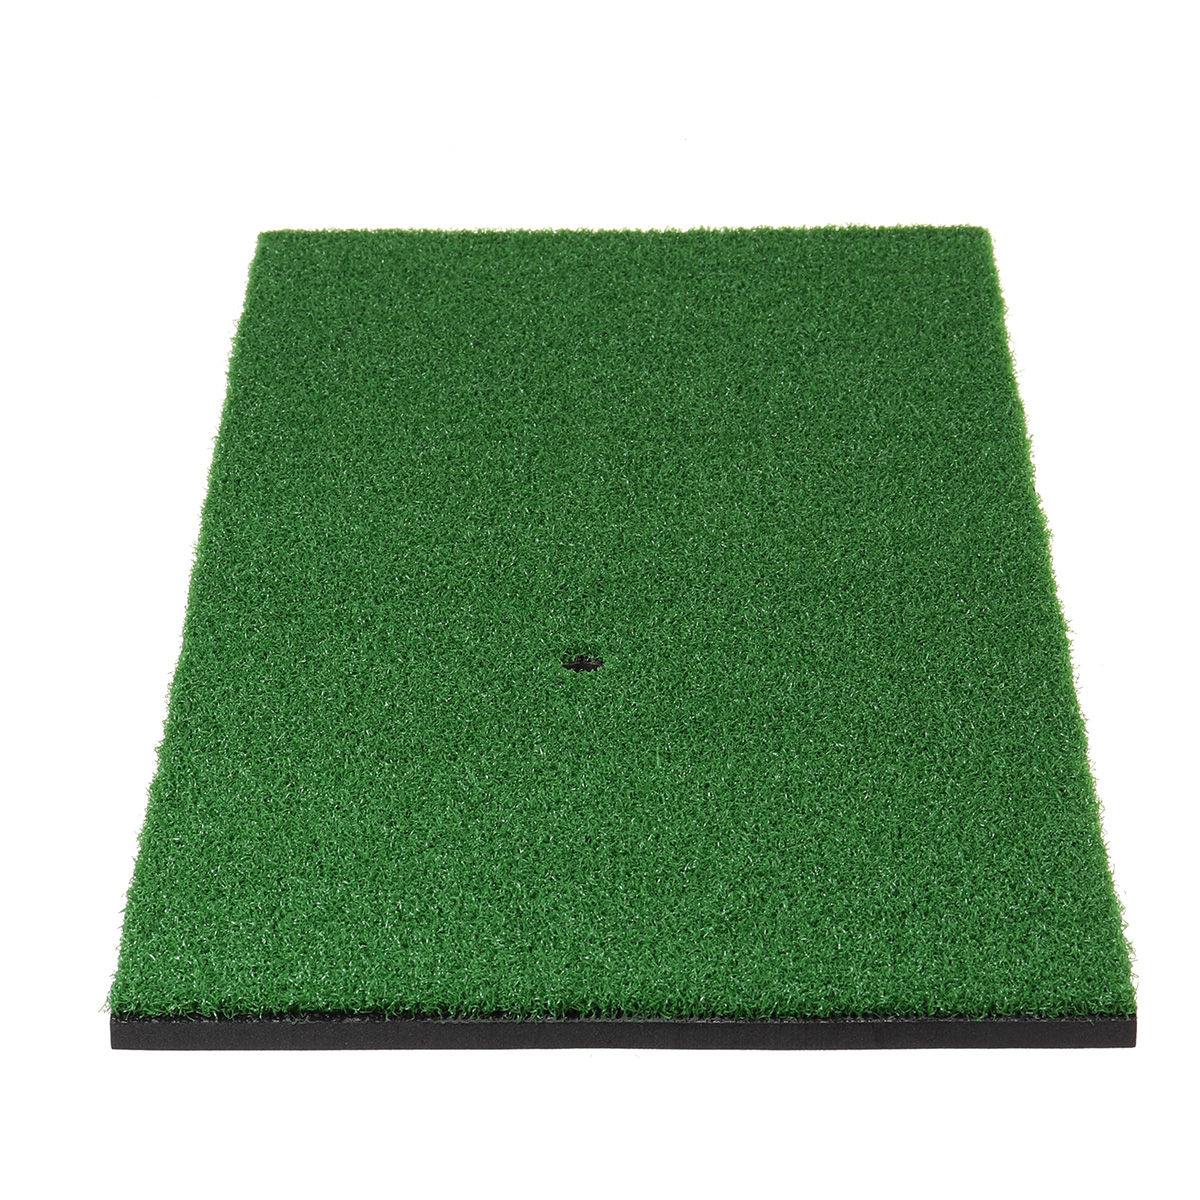 Backyard-Golf-Practice-Mat-Training-Hitting-Practice-Tee-Holder-Grass-Mat-1680279-6